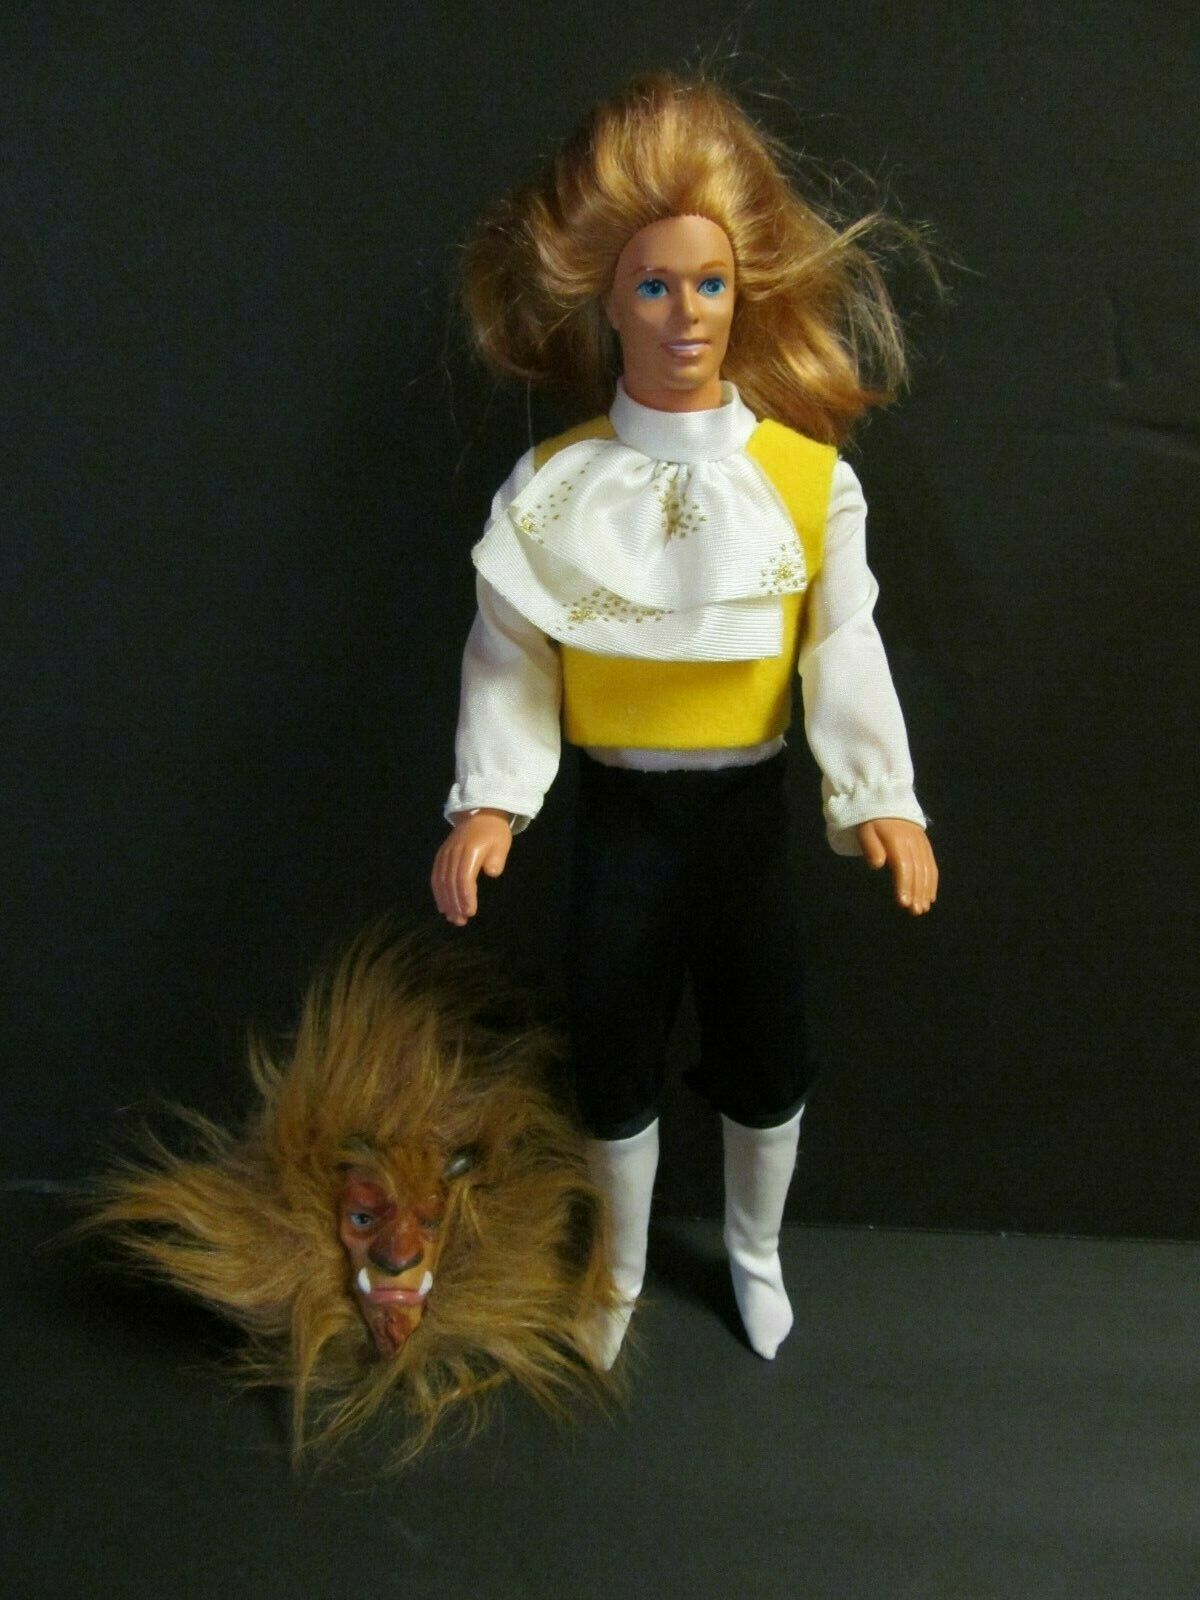 beauty and the beast barbie 1991